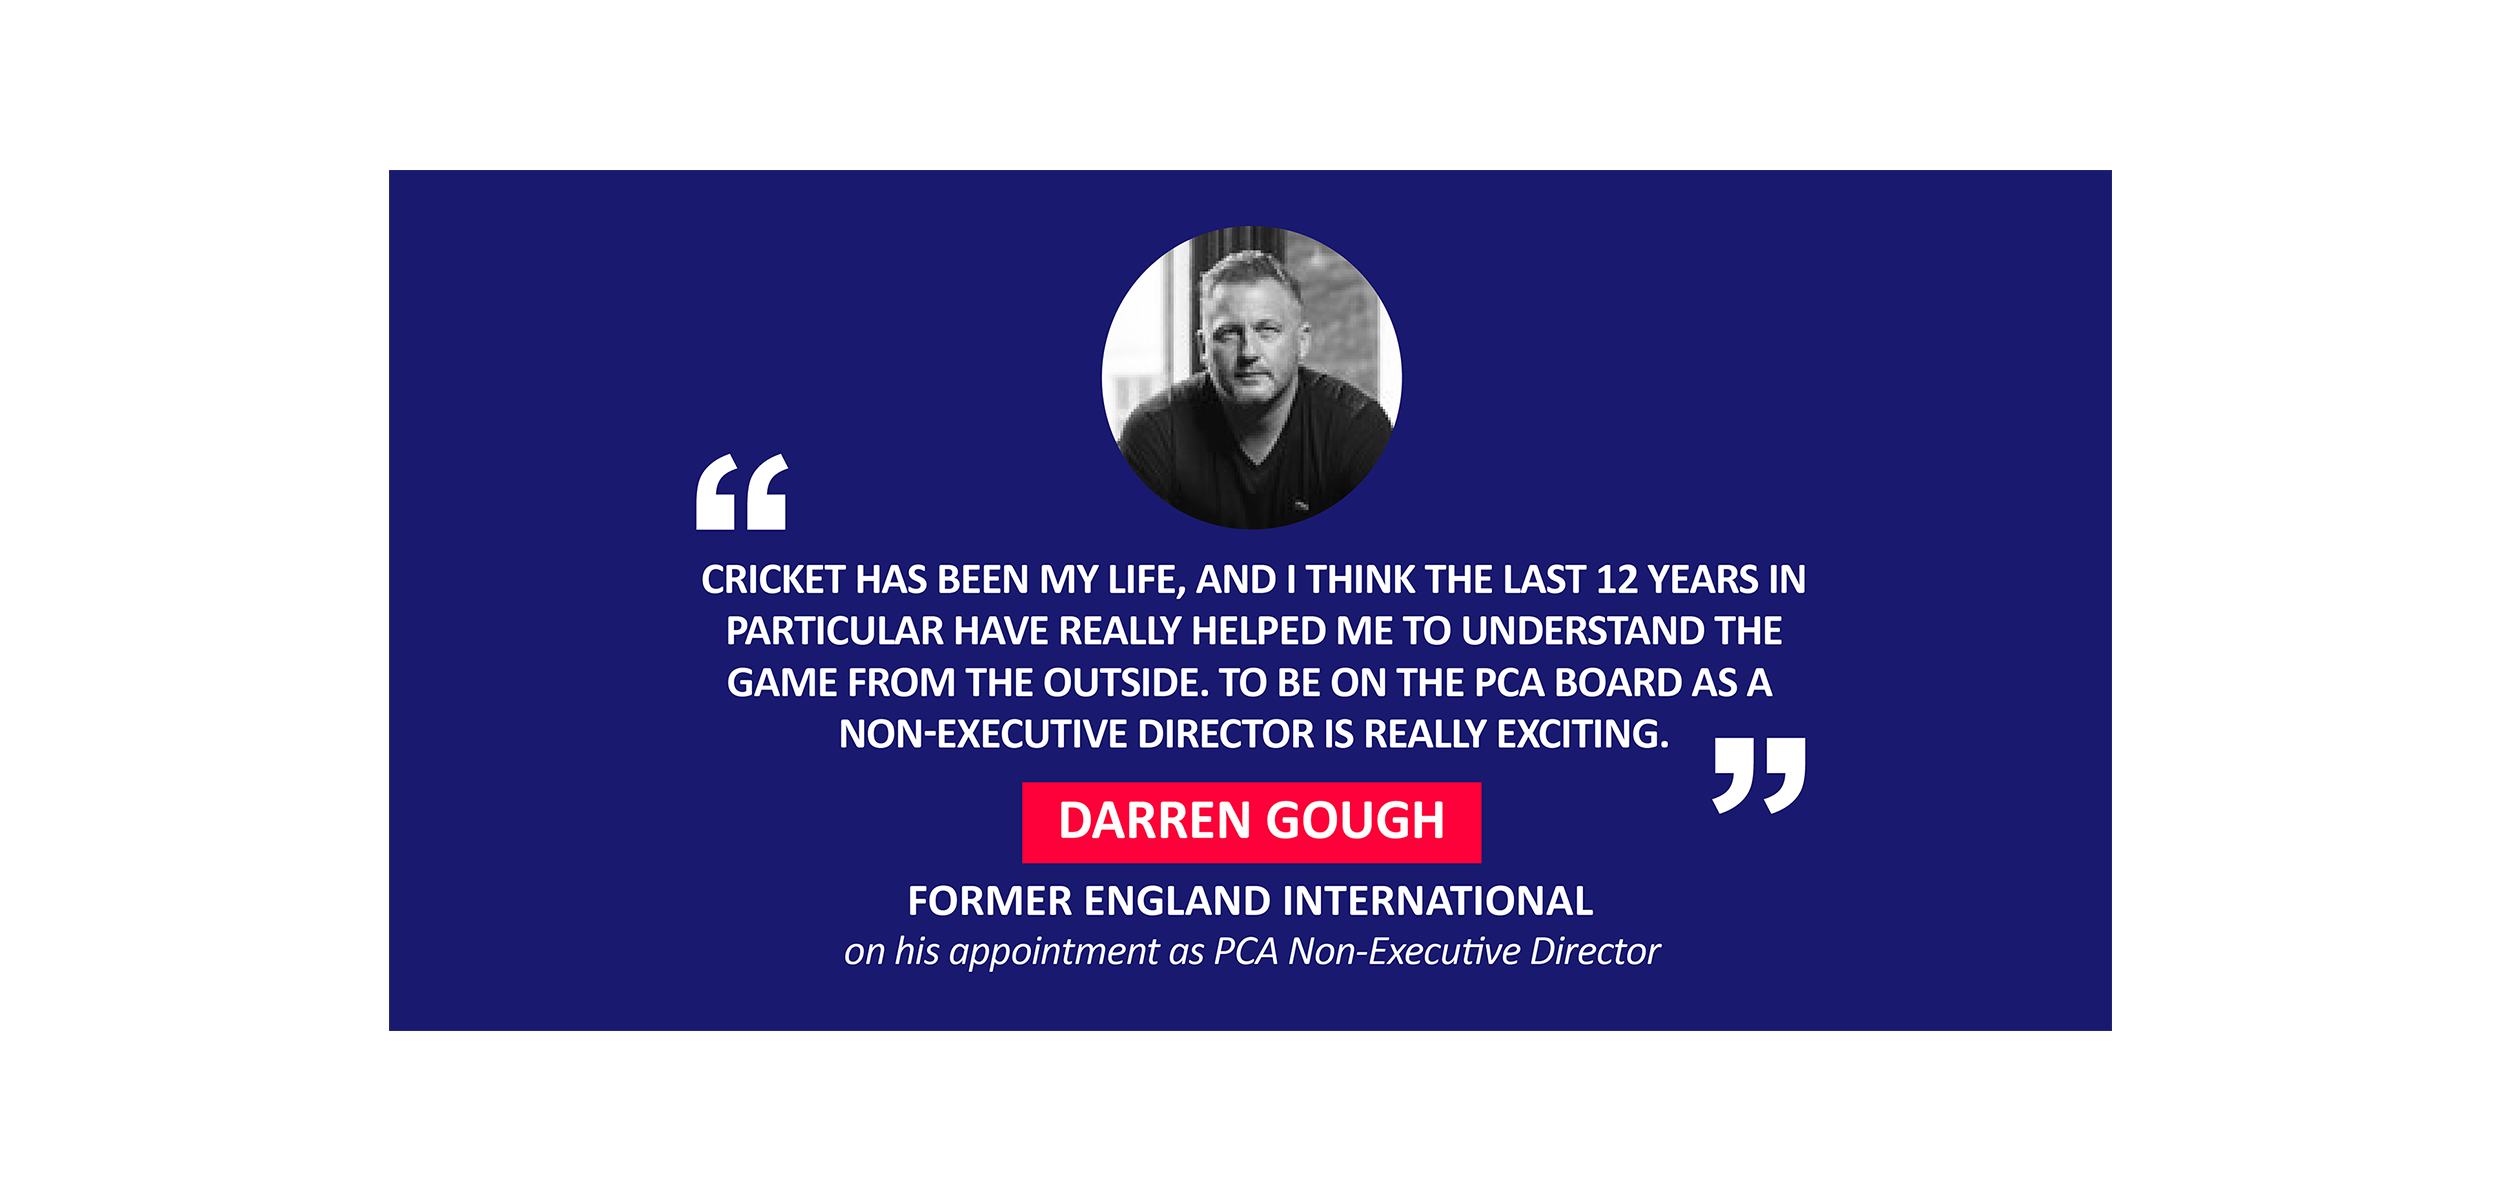 Darren Gough, former England International on his appointment as PCA Non-Executive Director